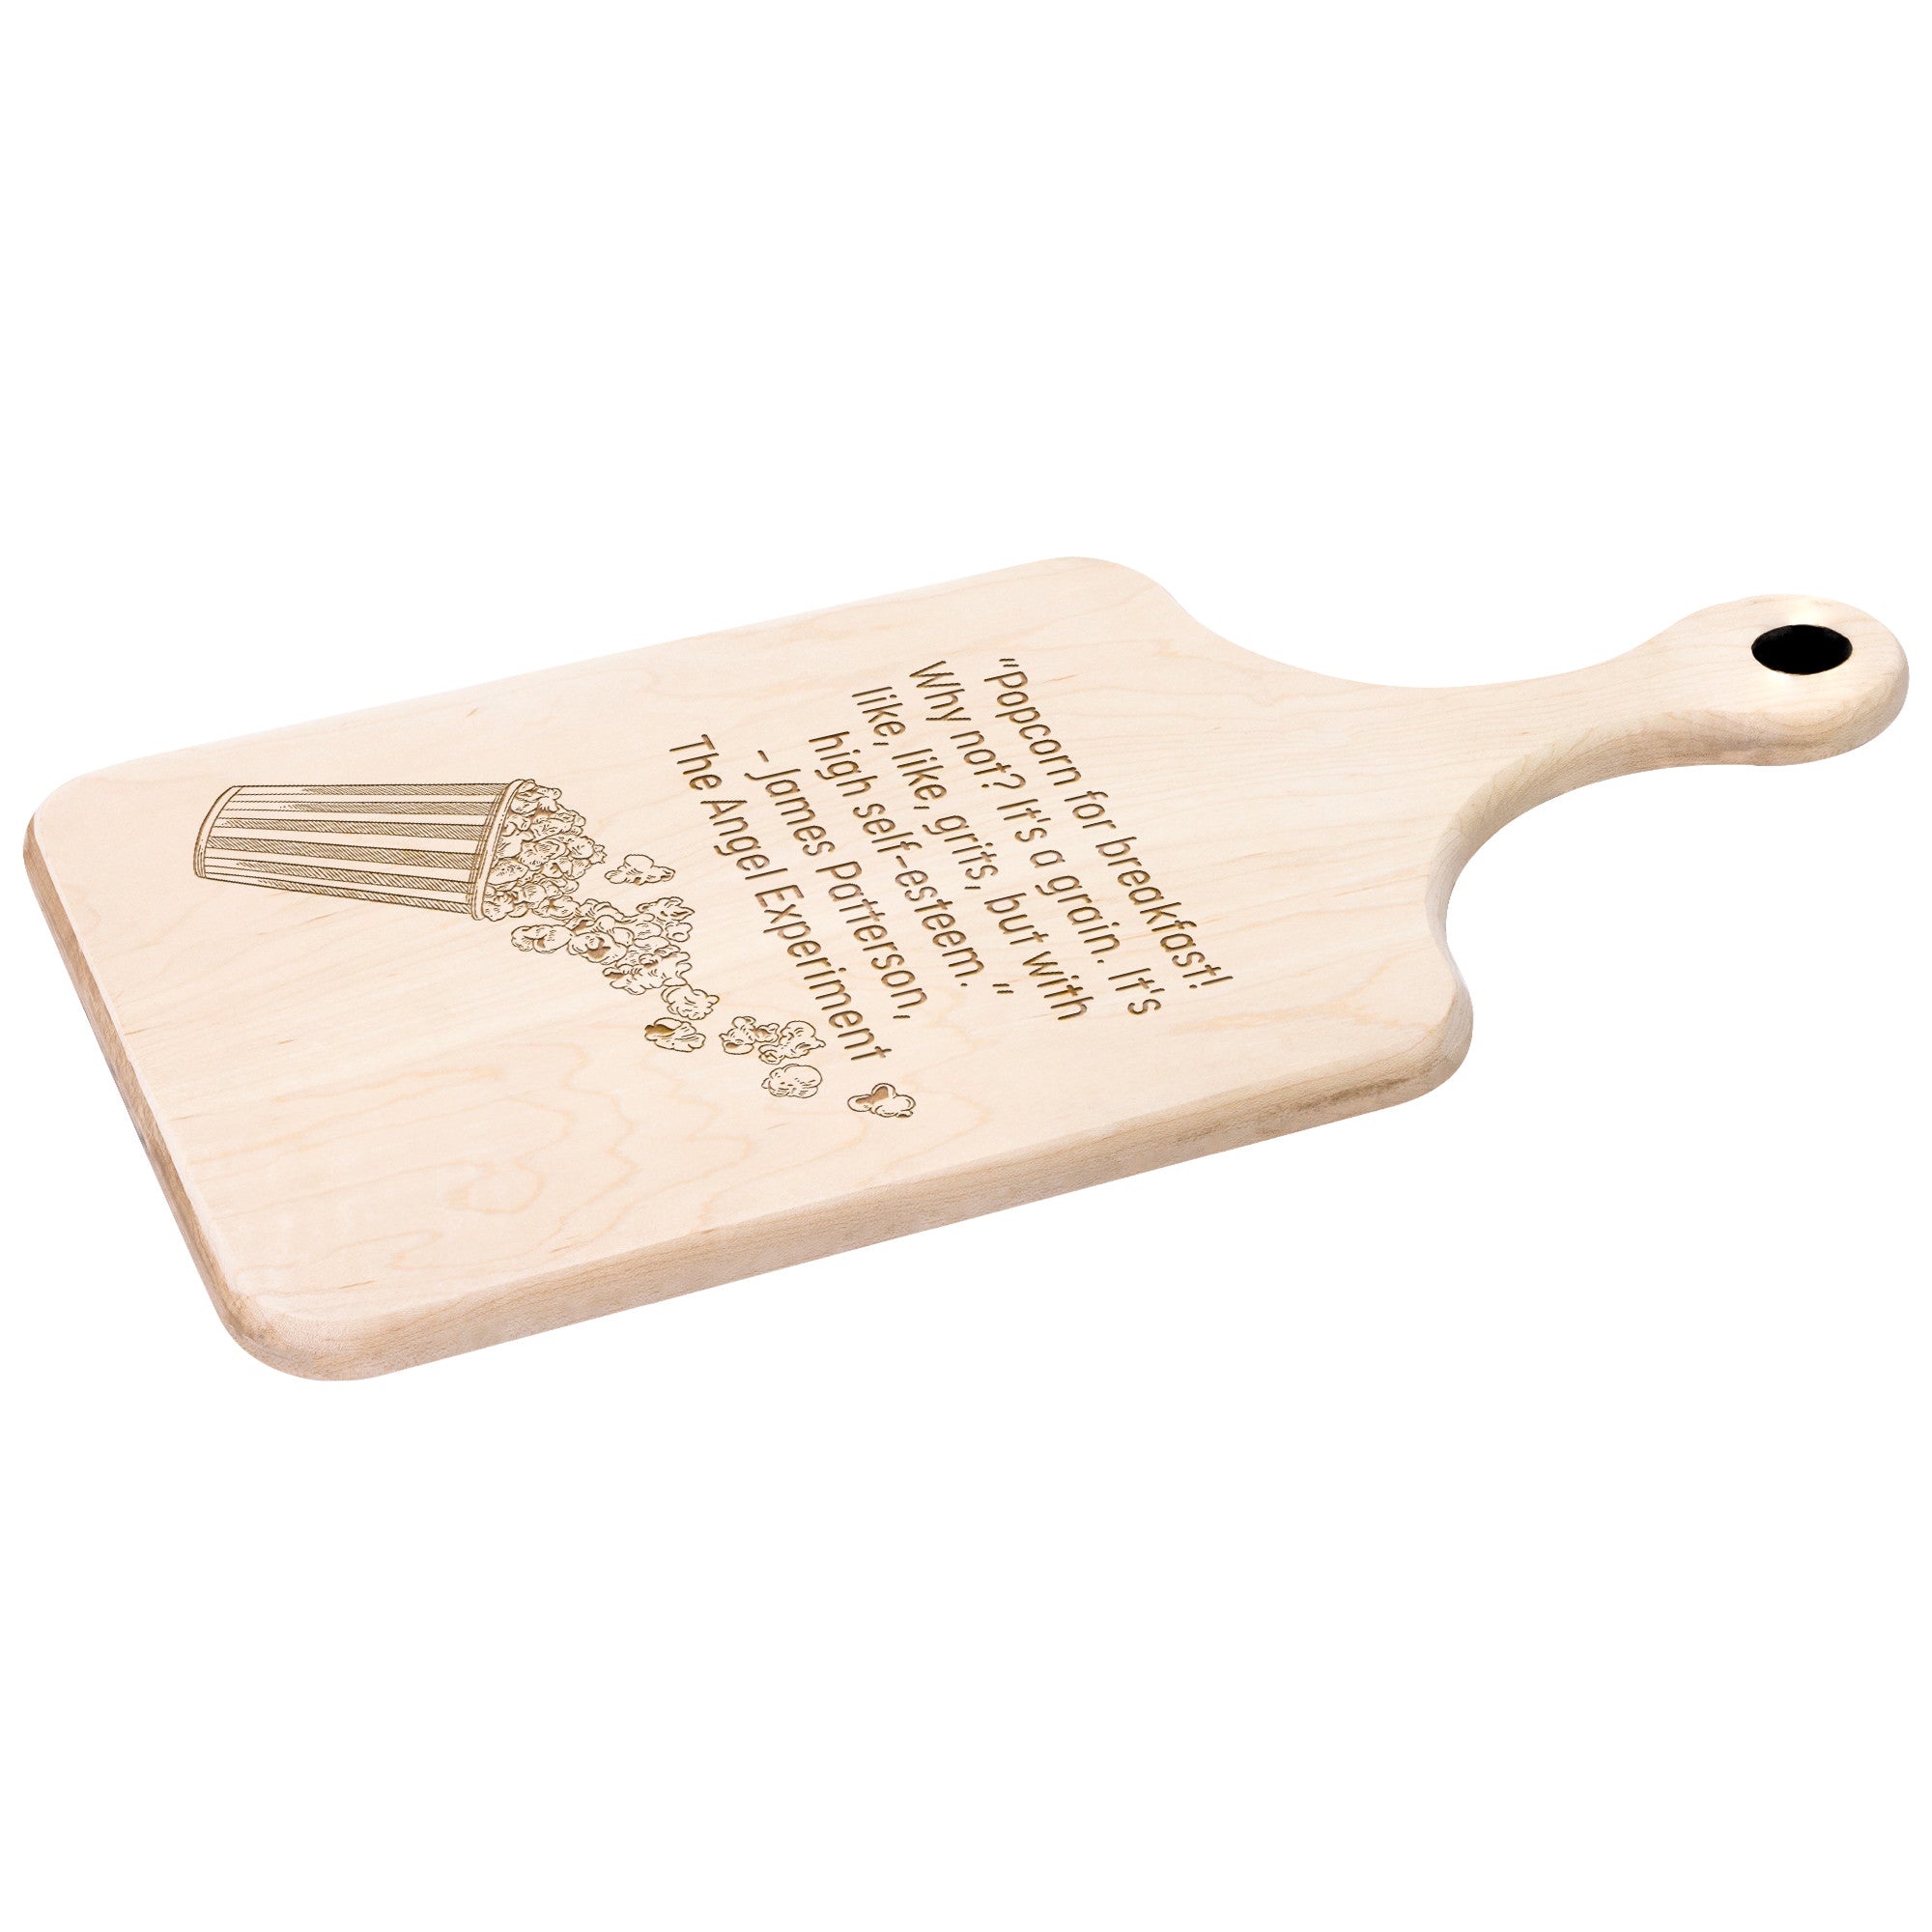 Hardwood Paddle Cutting Board - Variant 12